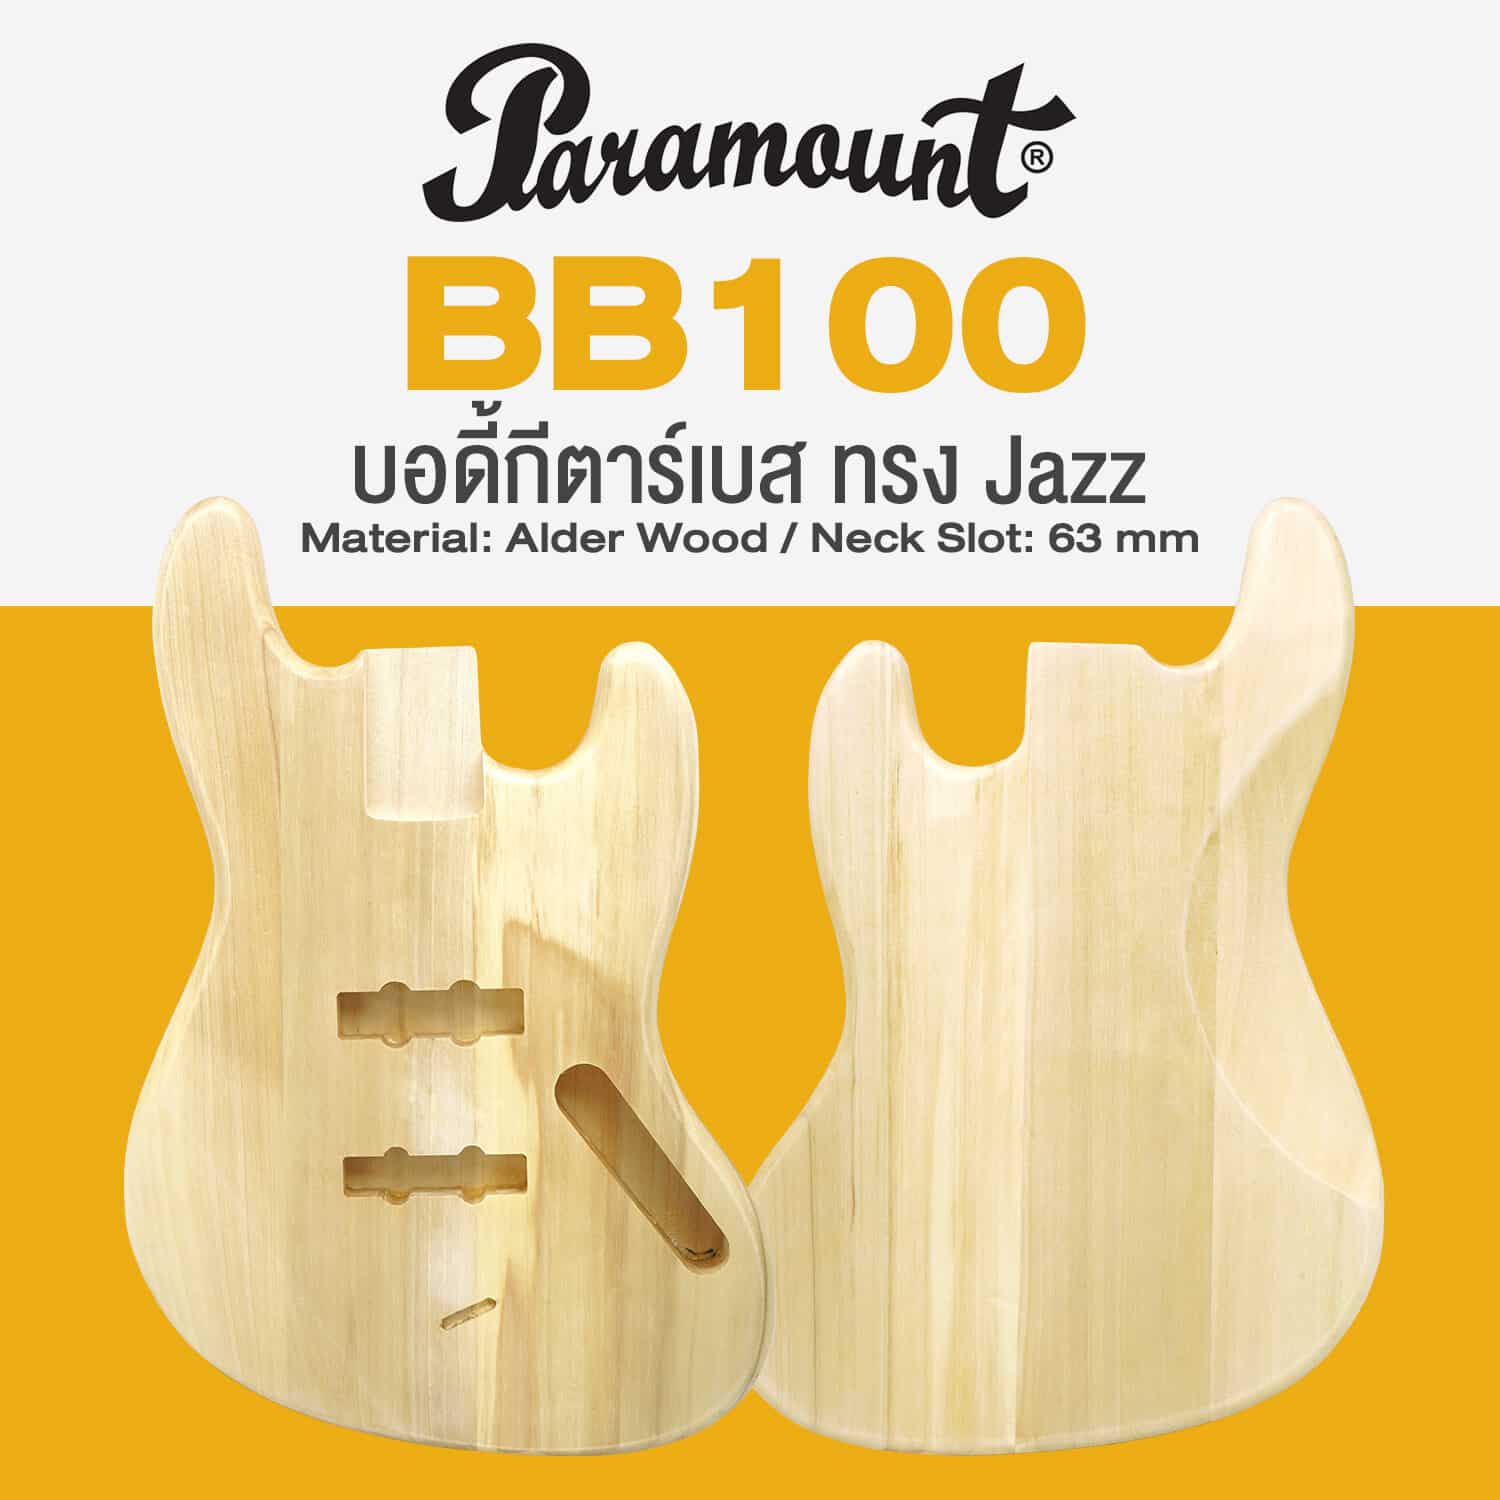 Paramount BB100